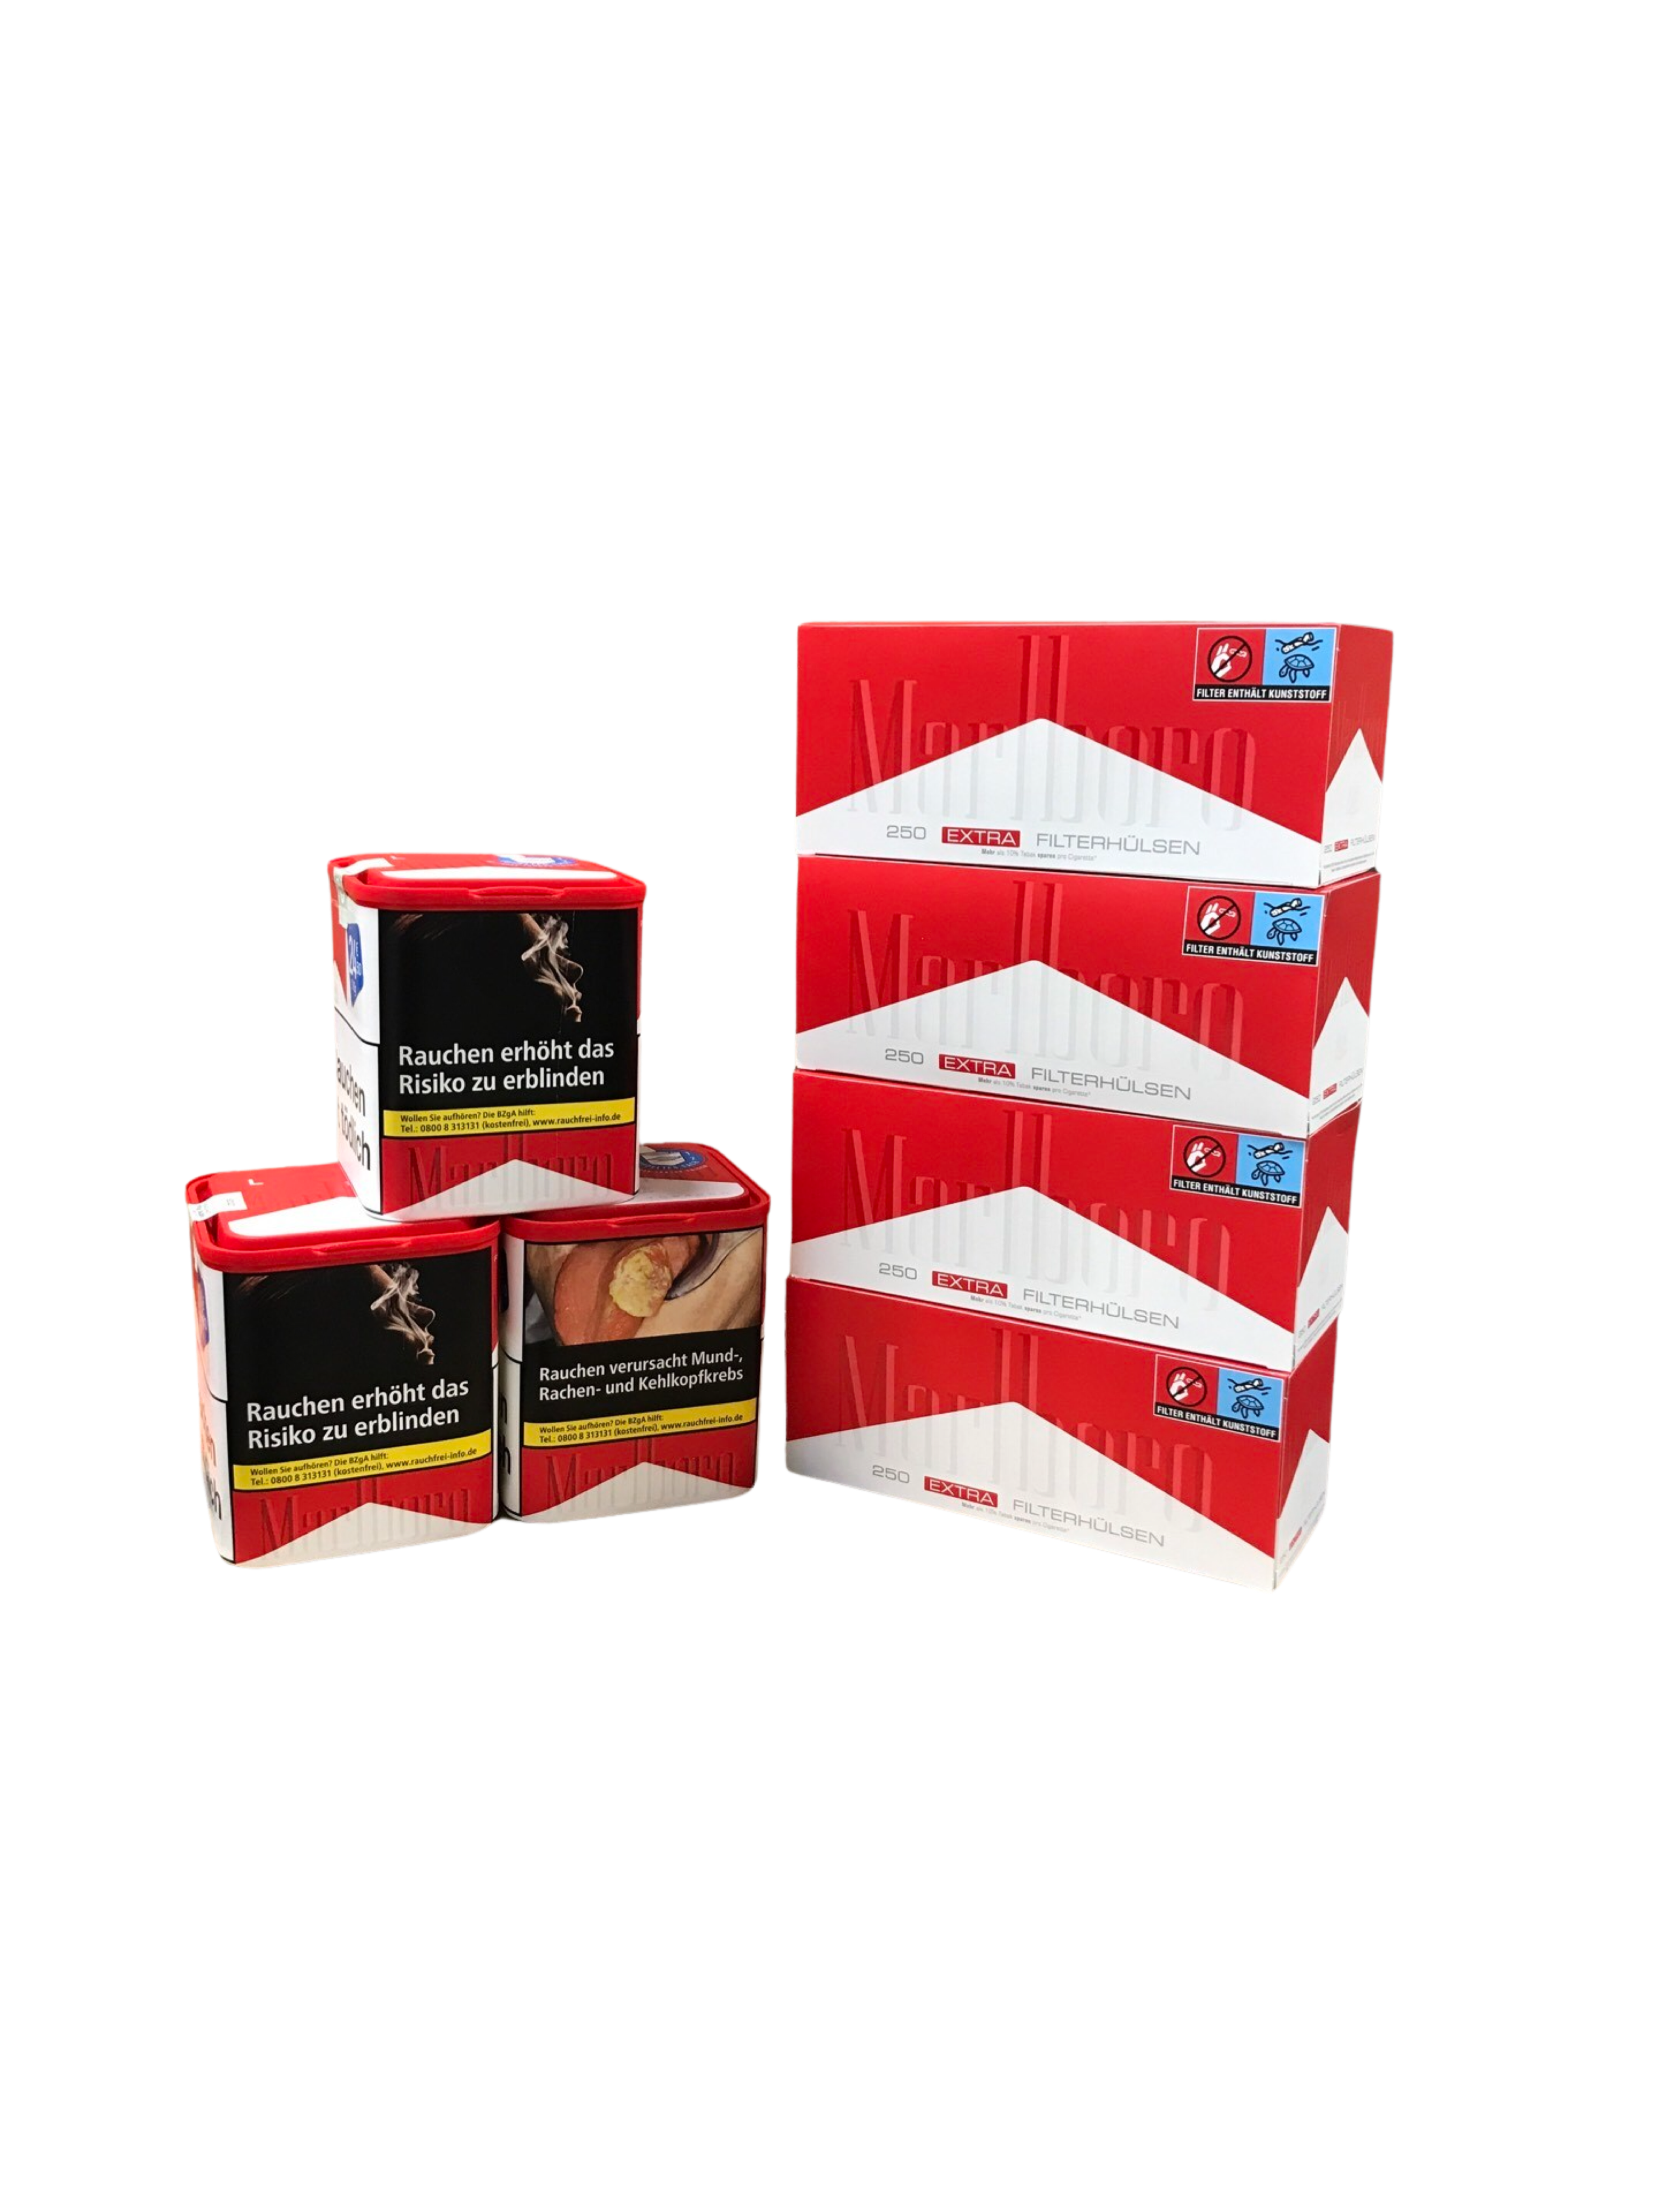 3 x MARLBORO Premium Tobacco Red 110g + 1000 Marlboro Red Extra Hülsen